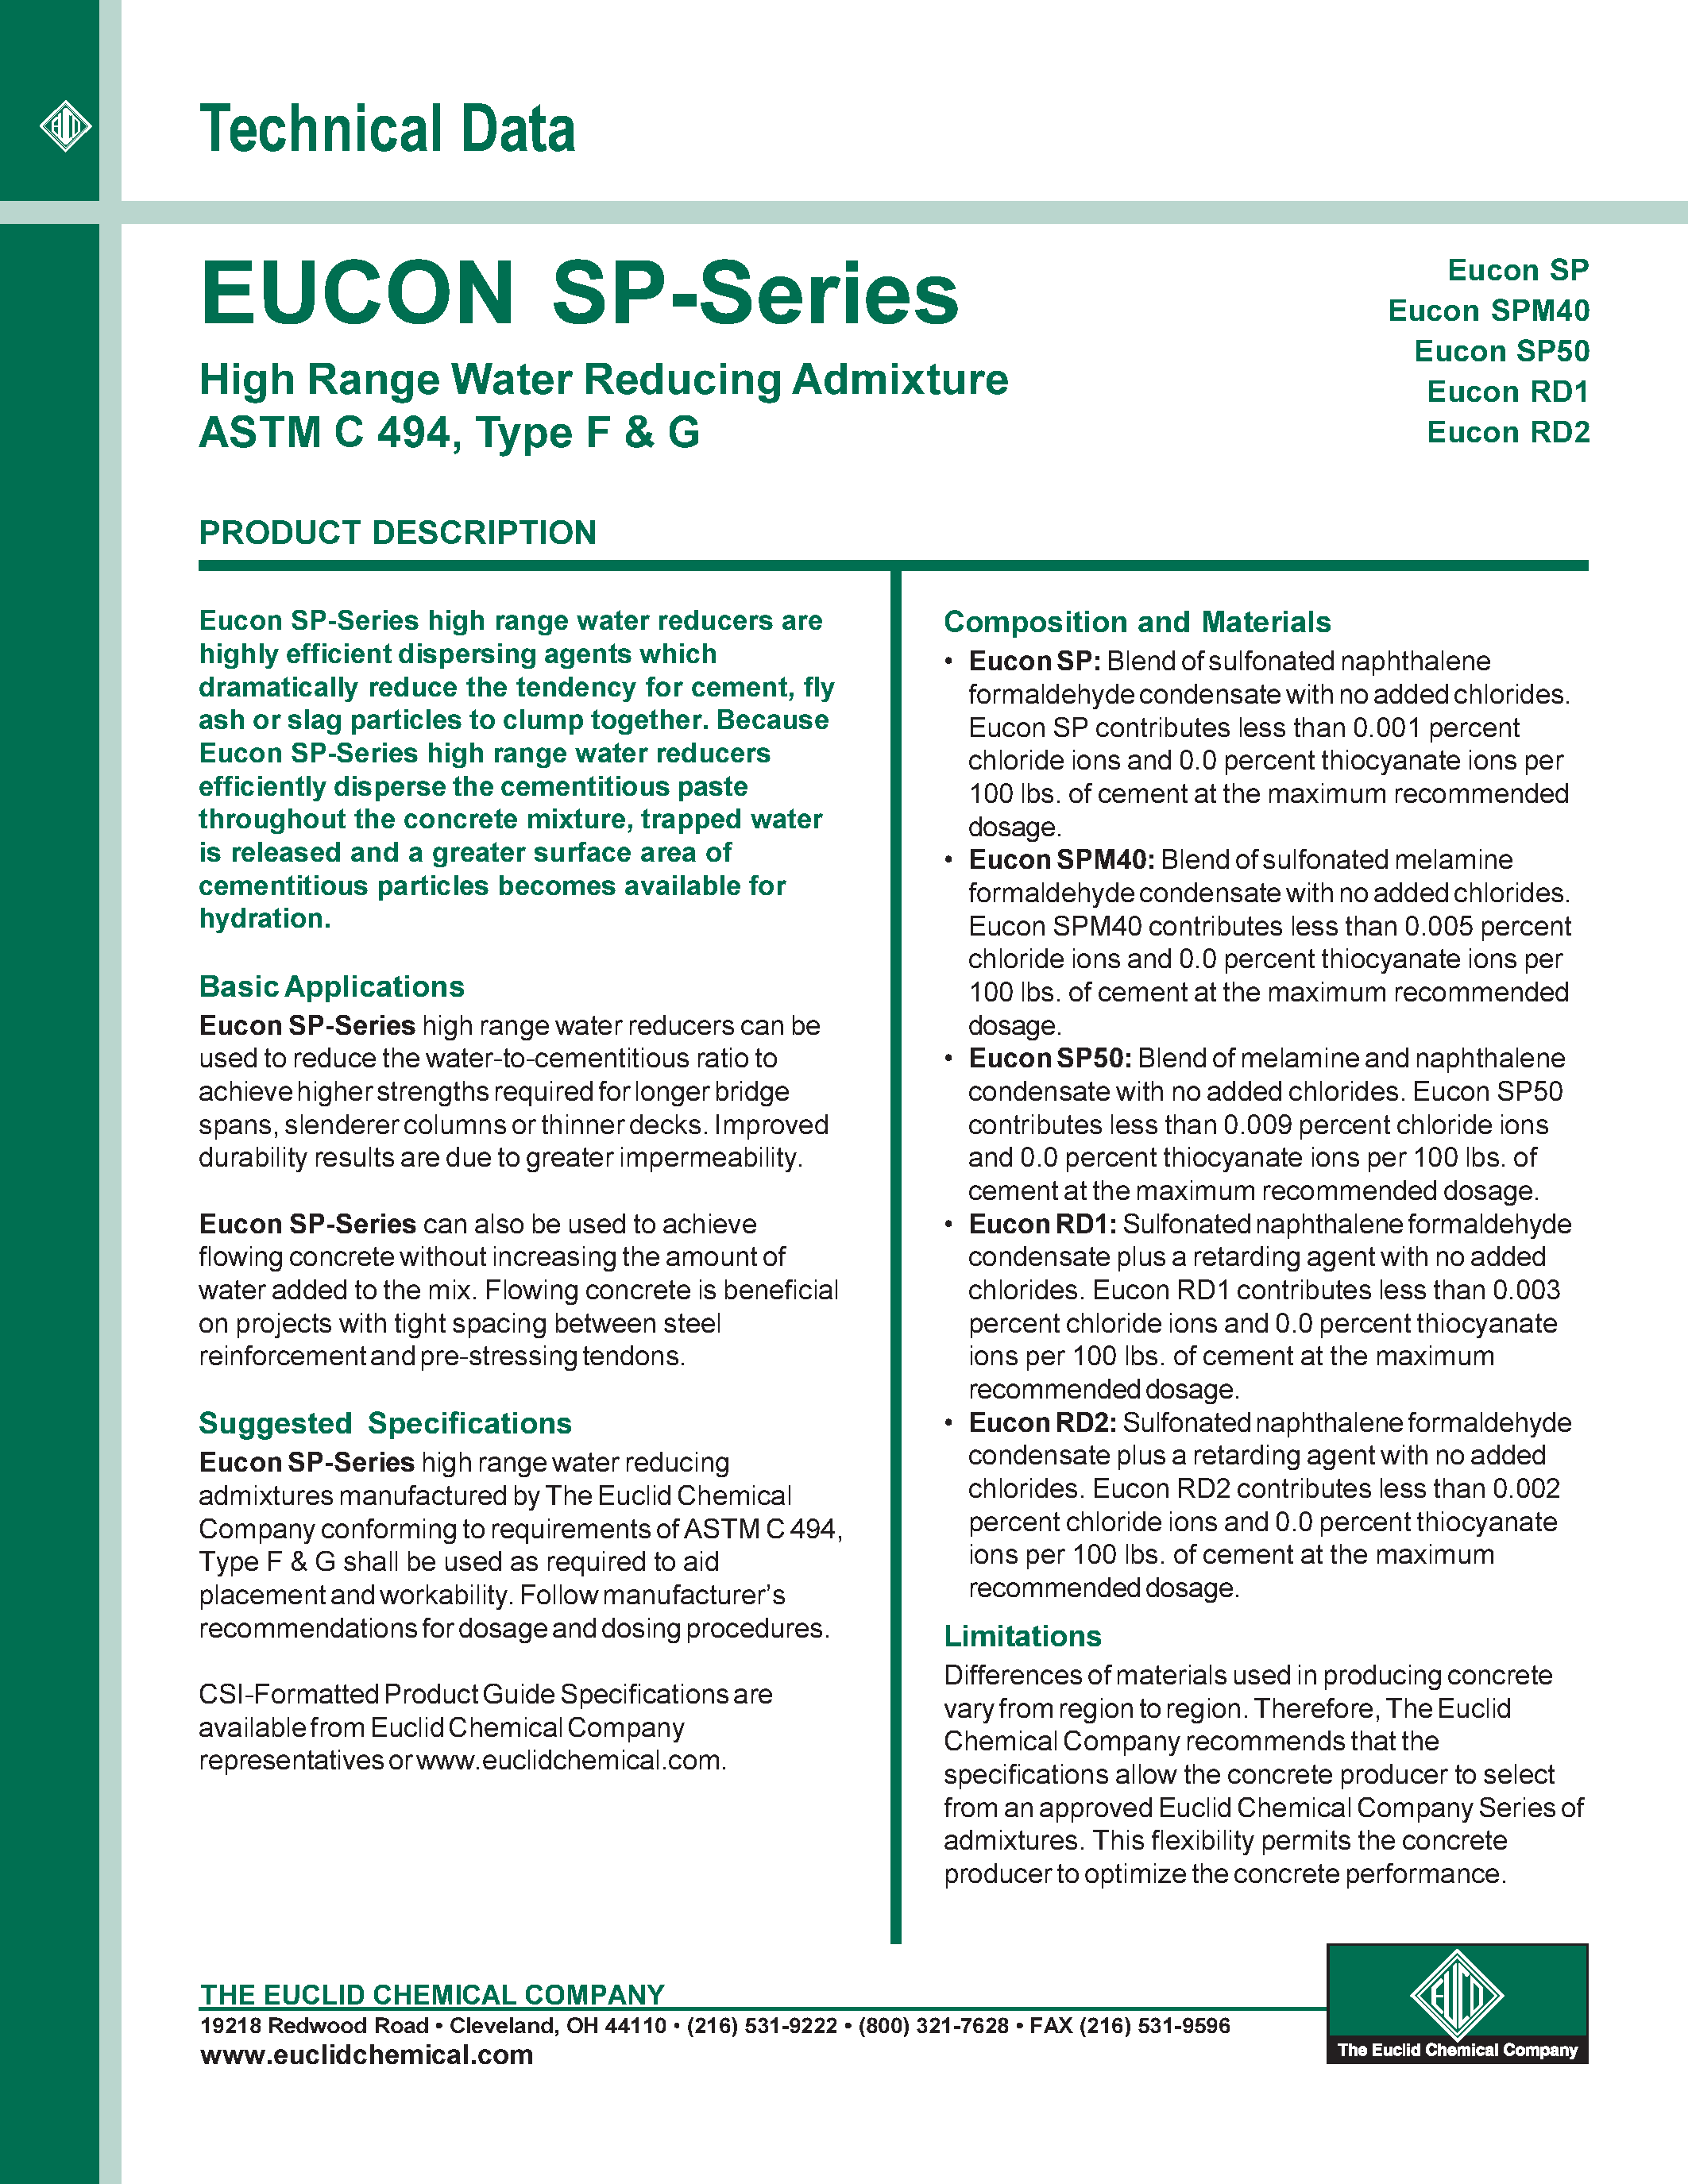 Даташит SPM40 - EUCON SP-Series / High Range Water Reducing Admixture страница 1